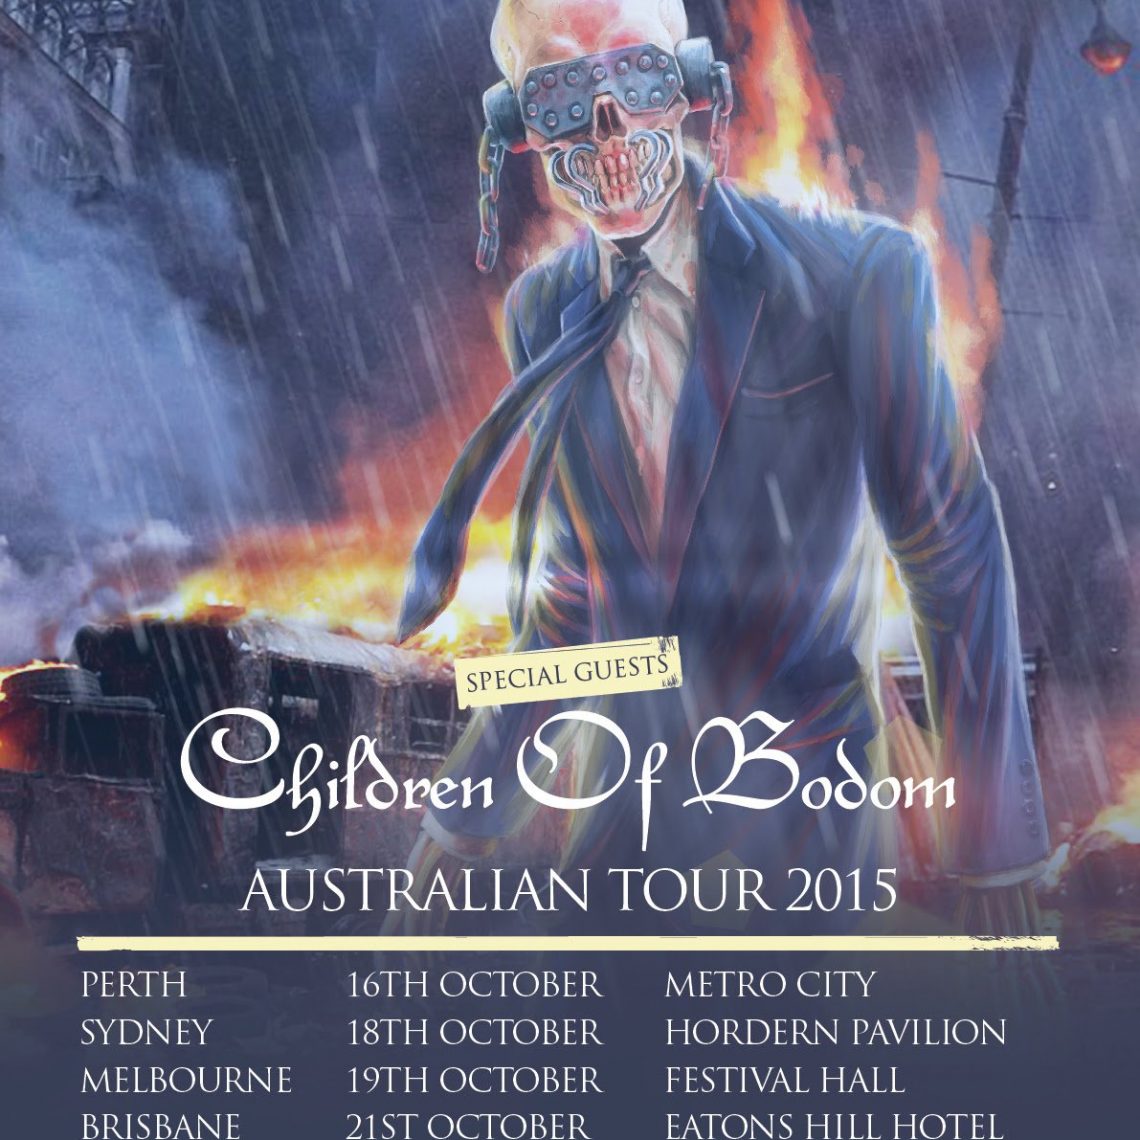 Megadeth/Children of Bodom – Eatons Hill Hotel, Brisbane, 21/10/15